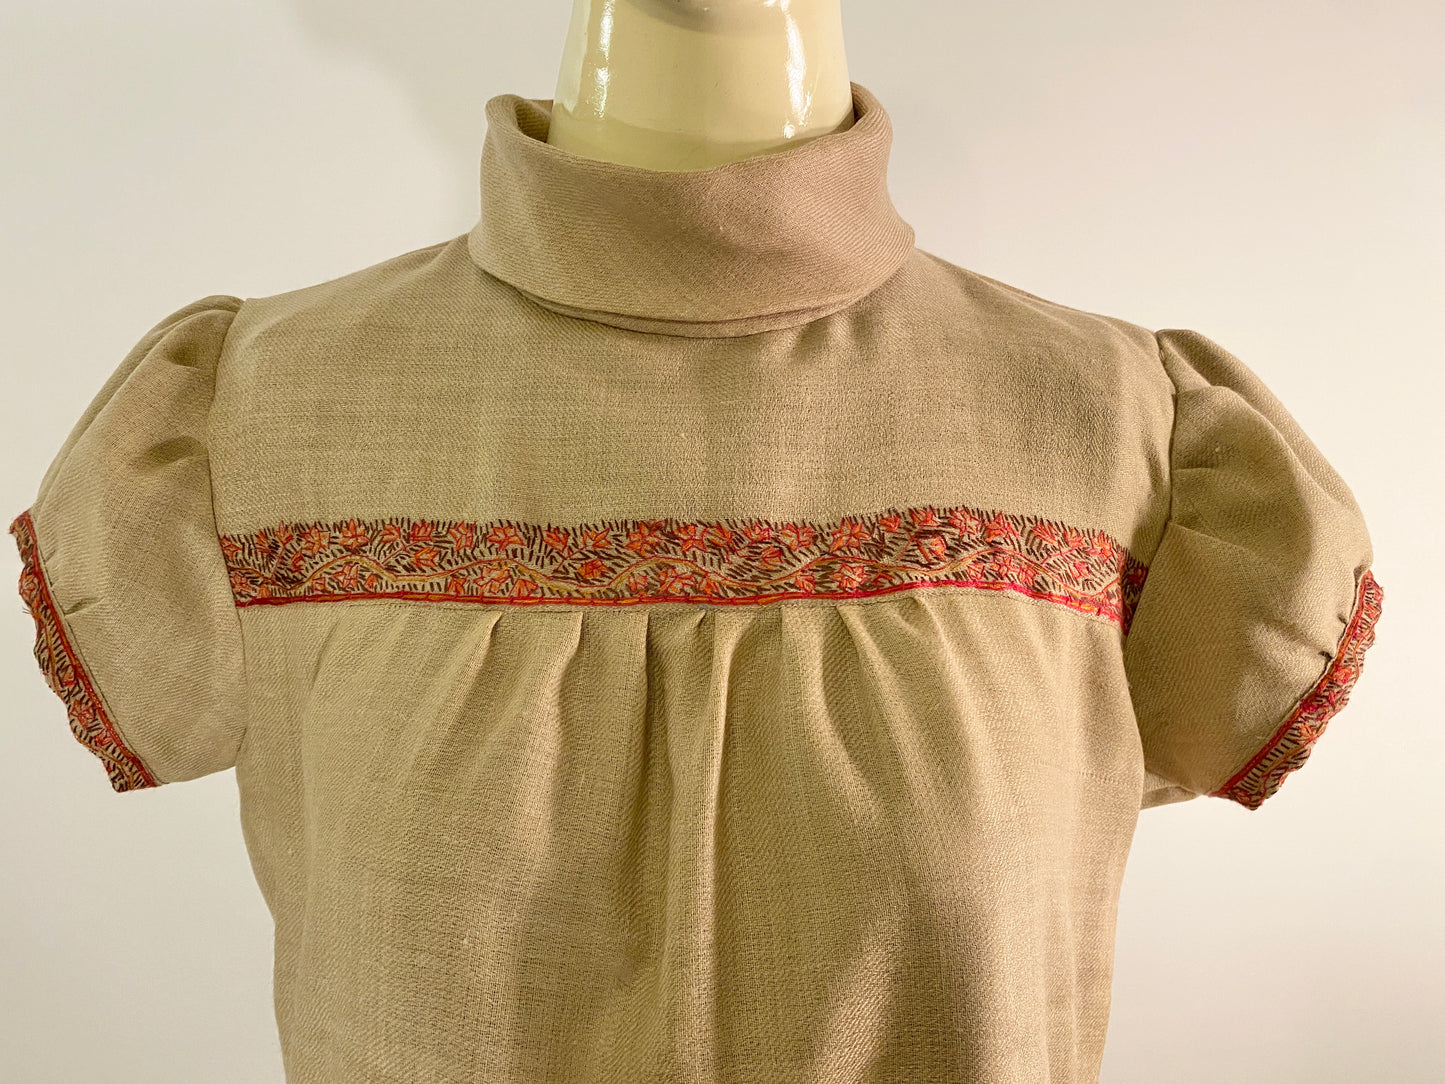 Allium Top in Embroidered Beige Lamb's Wool